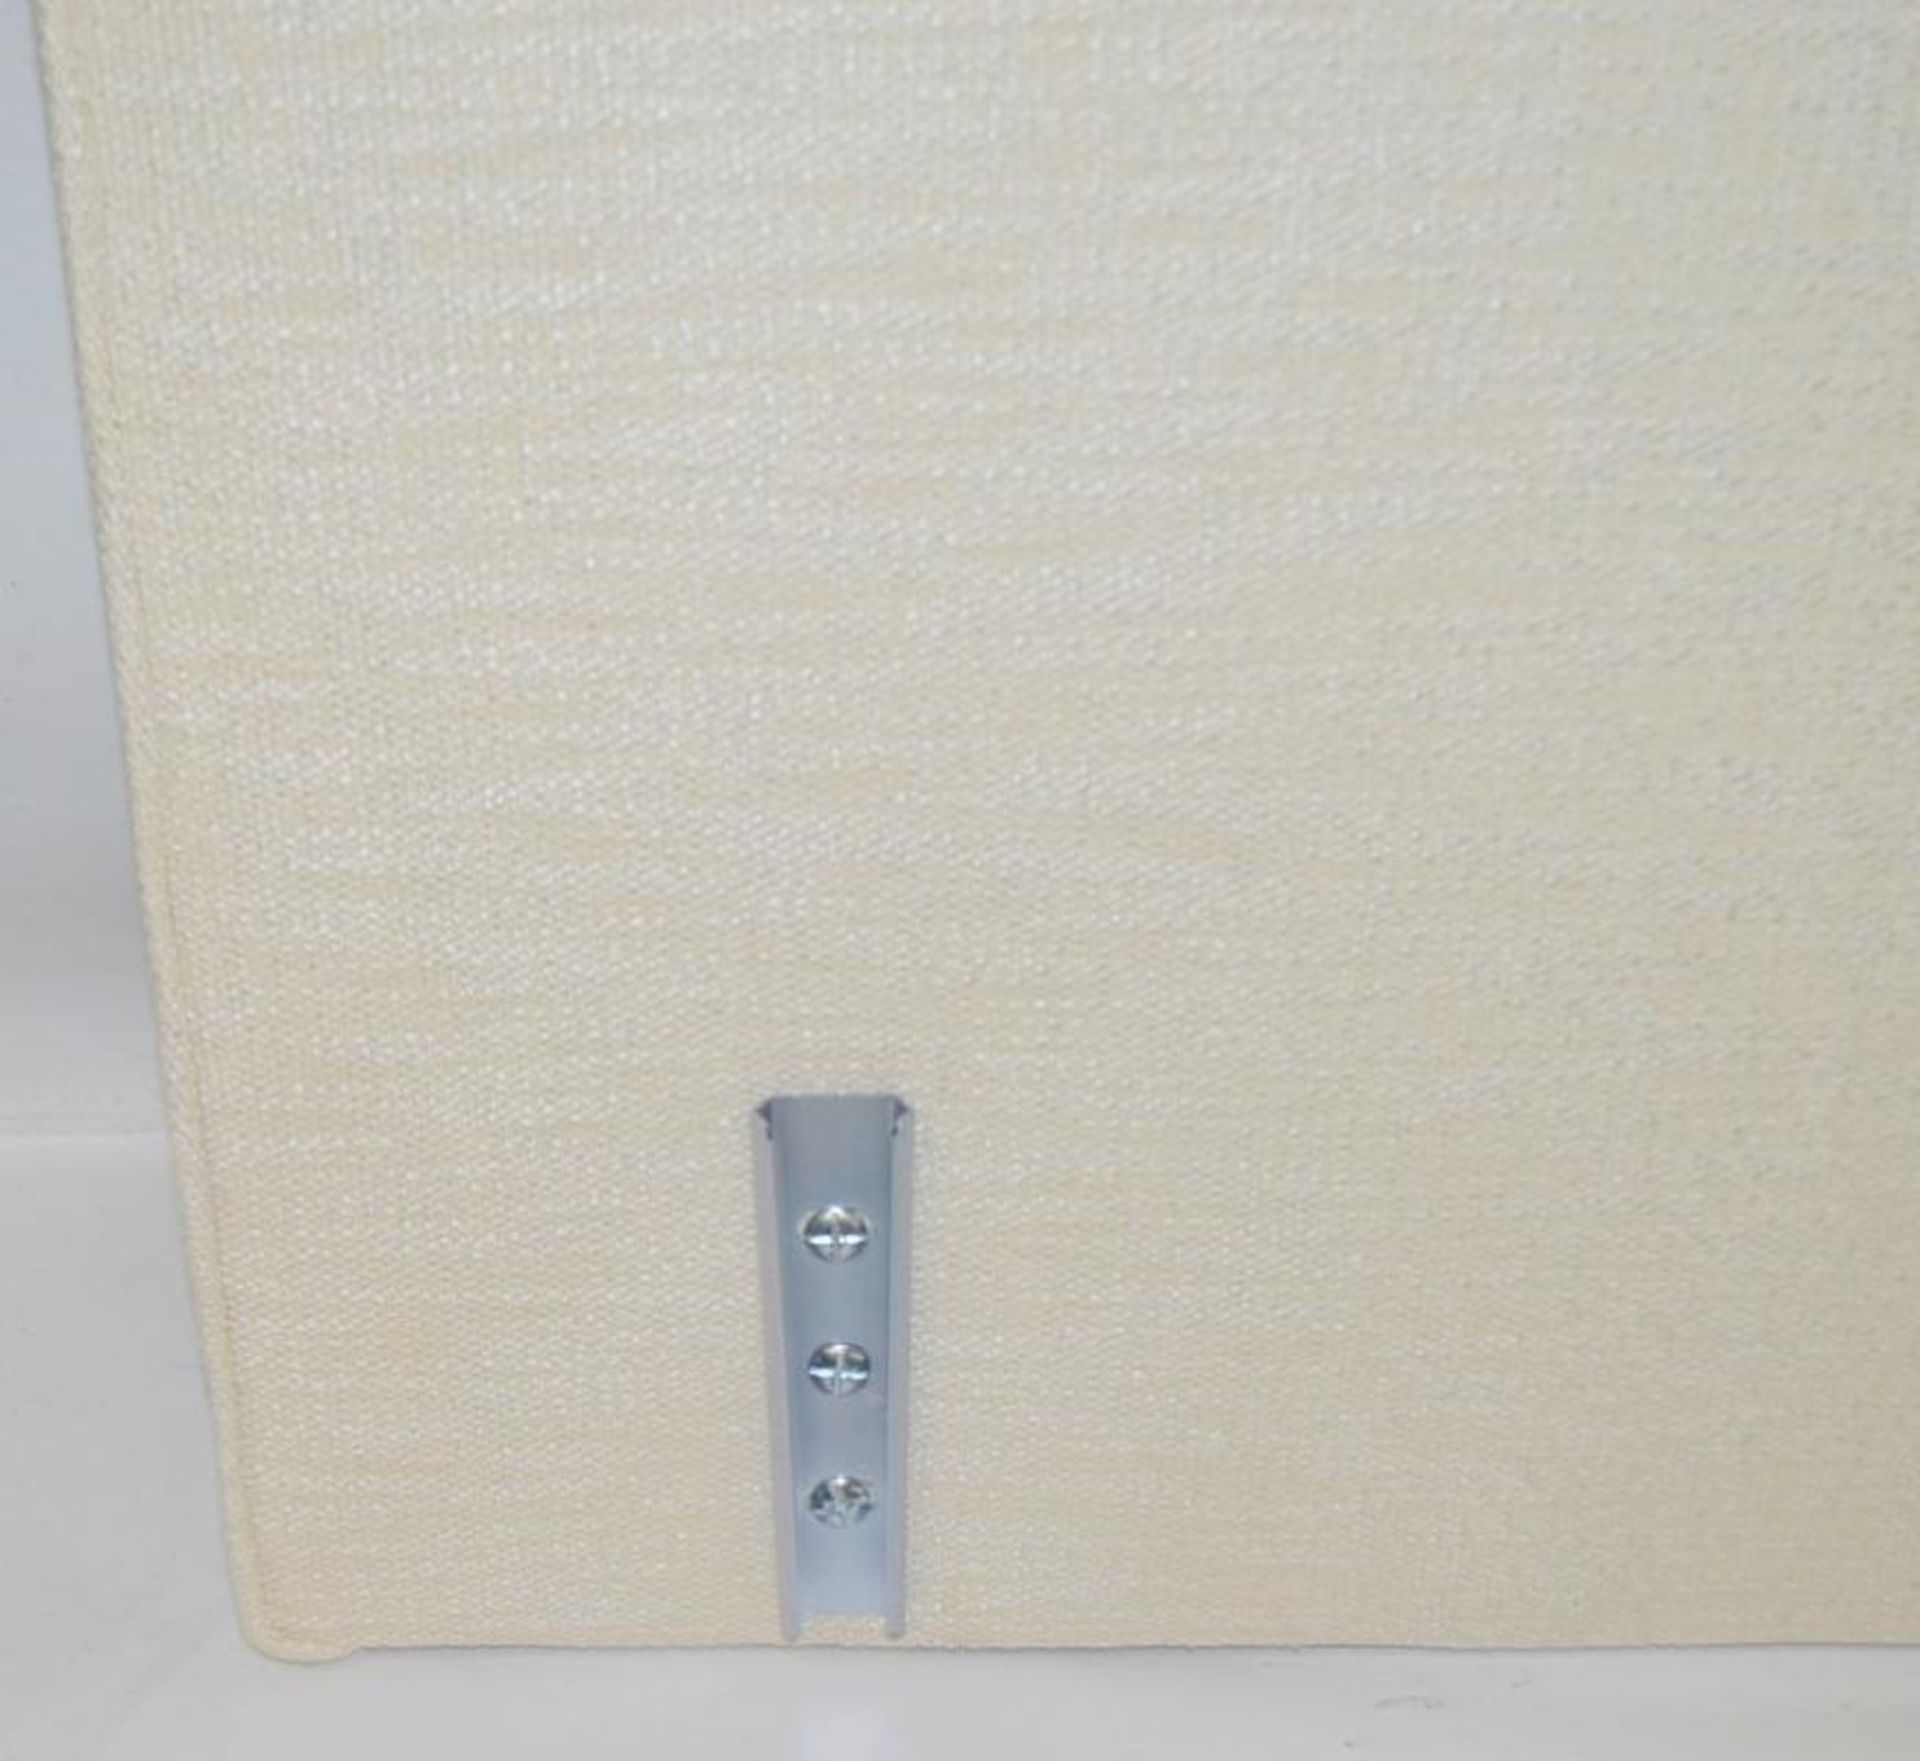 1 x VISPRING 'Eccleston' Luxury King Size Upholsted Headboard In A Premium Light Cream Fabric - Hand - Image 5 of 5